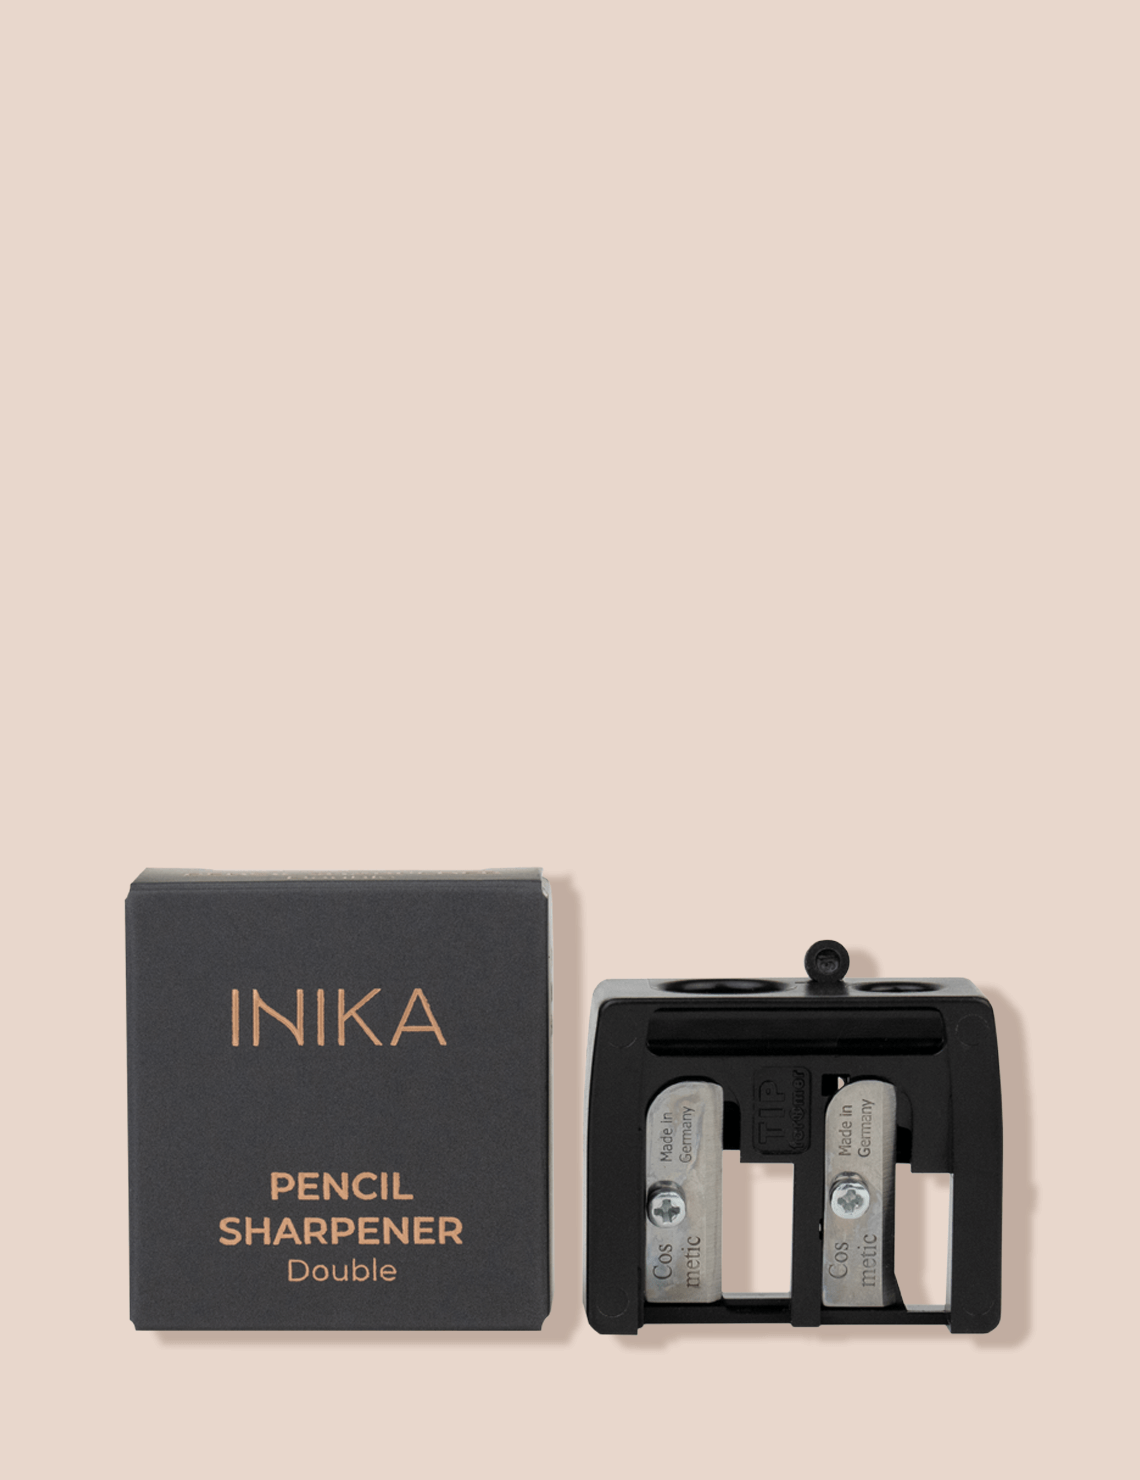 INIKA Pencil Sharpener Double